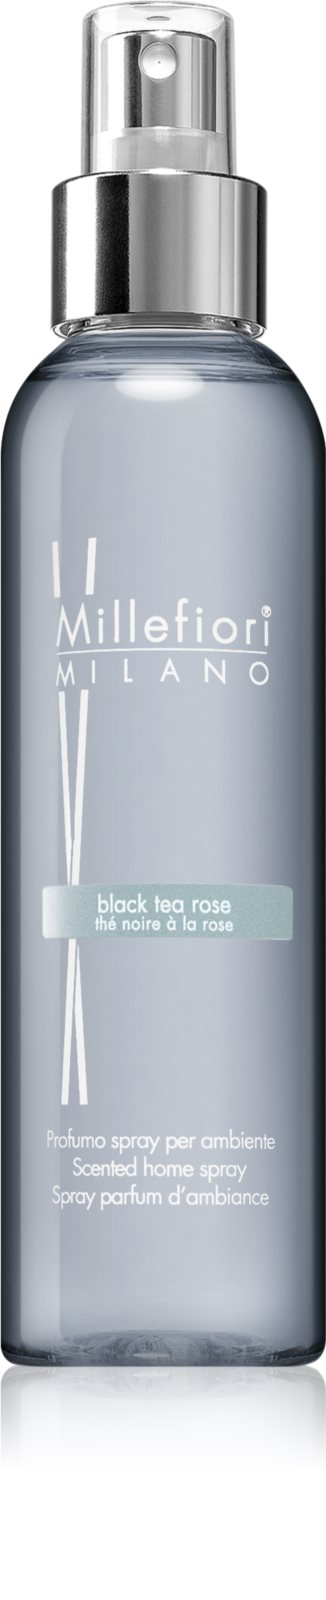 Millefiori Roomspray Black tea rose 150ml